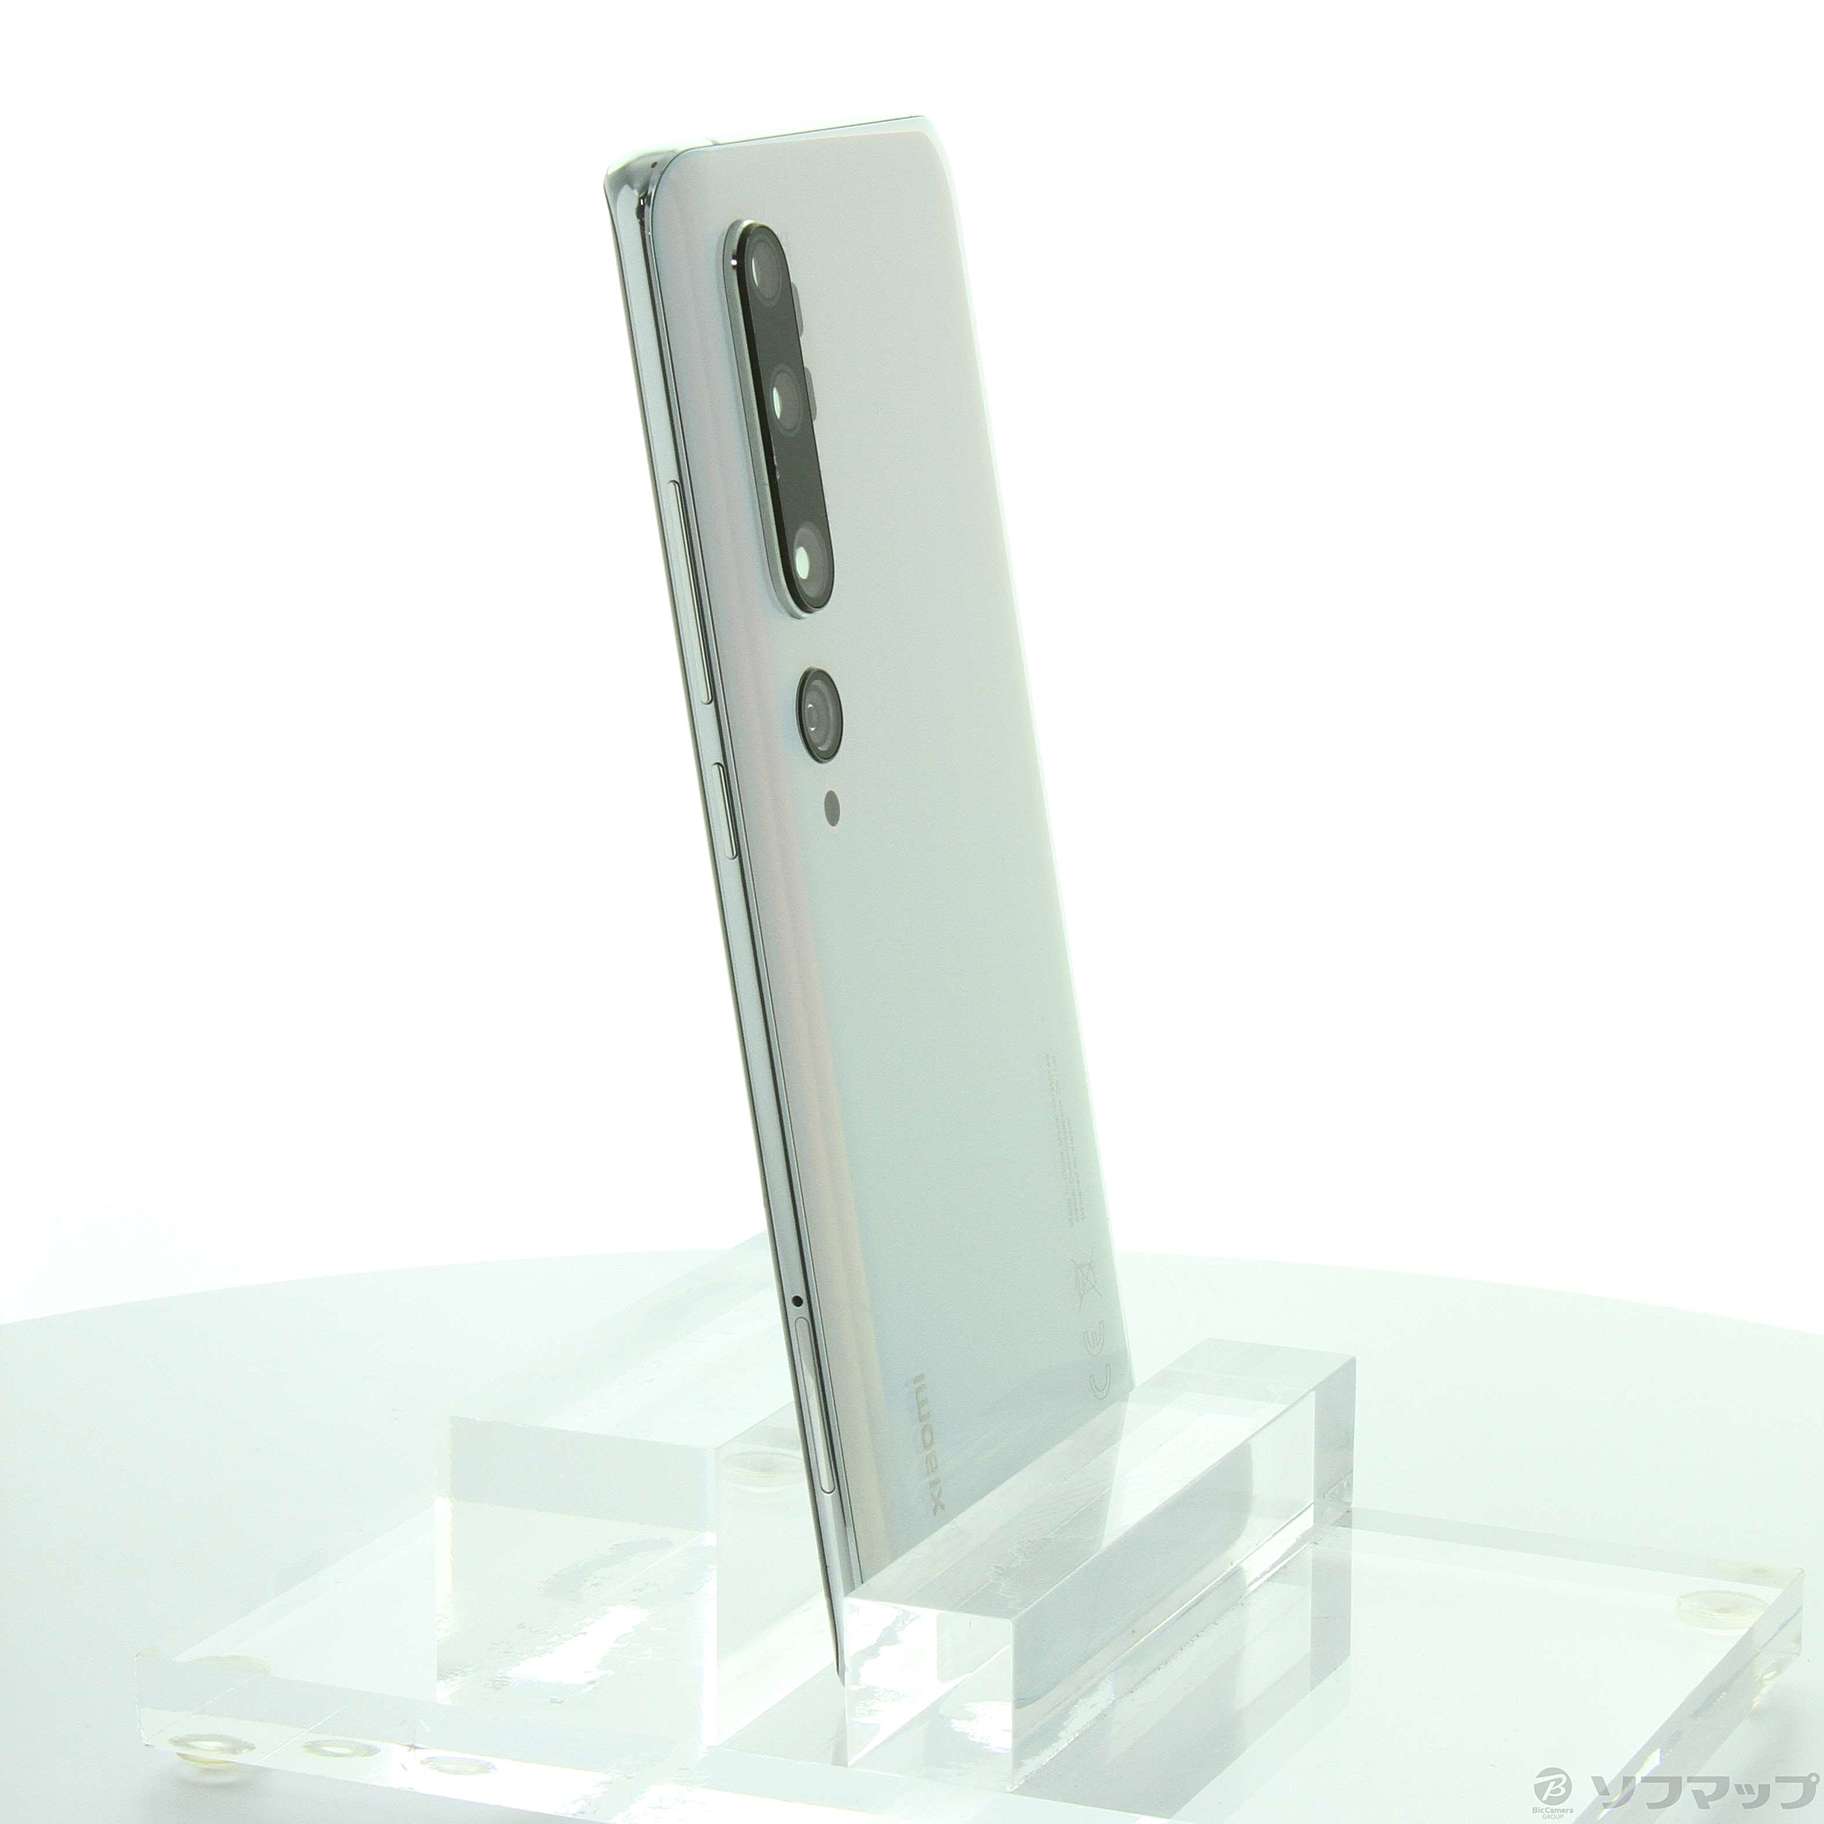 Mi Note 10 128GB グレイシャーホワイト M1910F4G SIMフリー